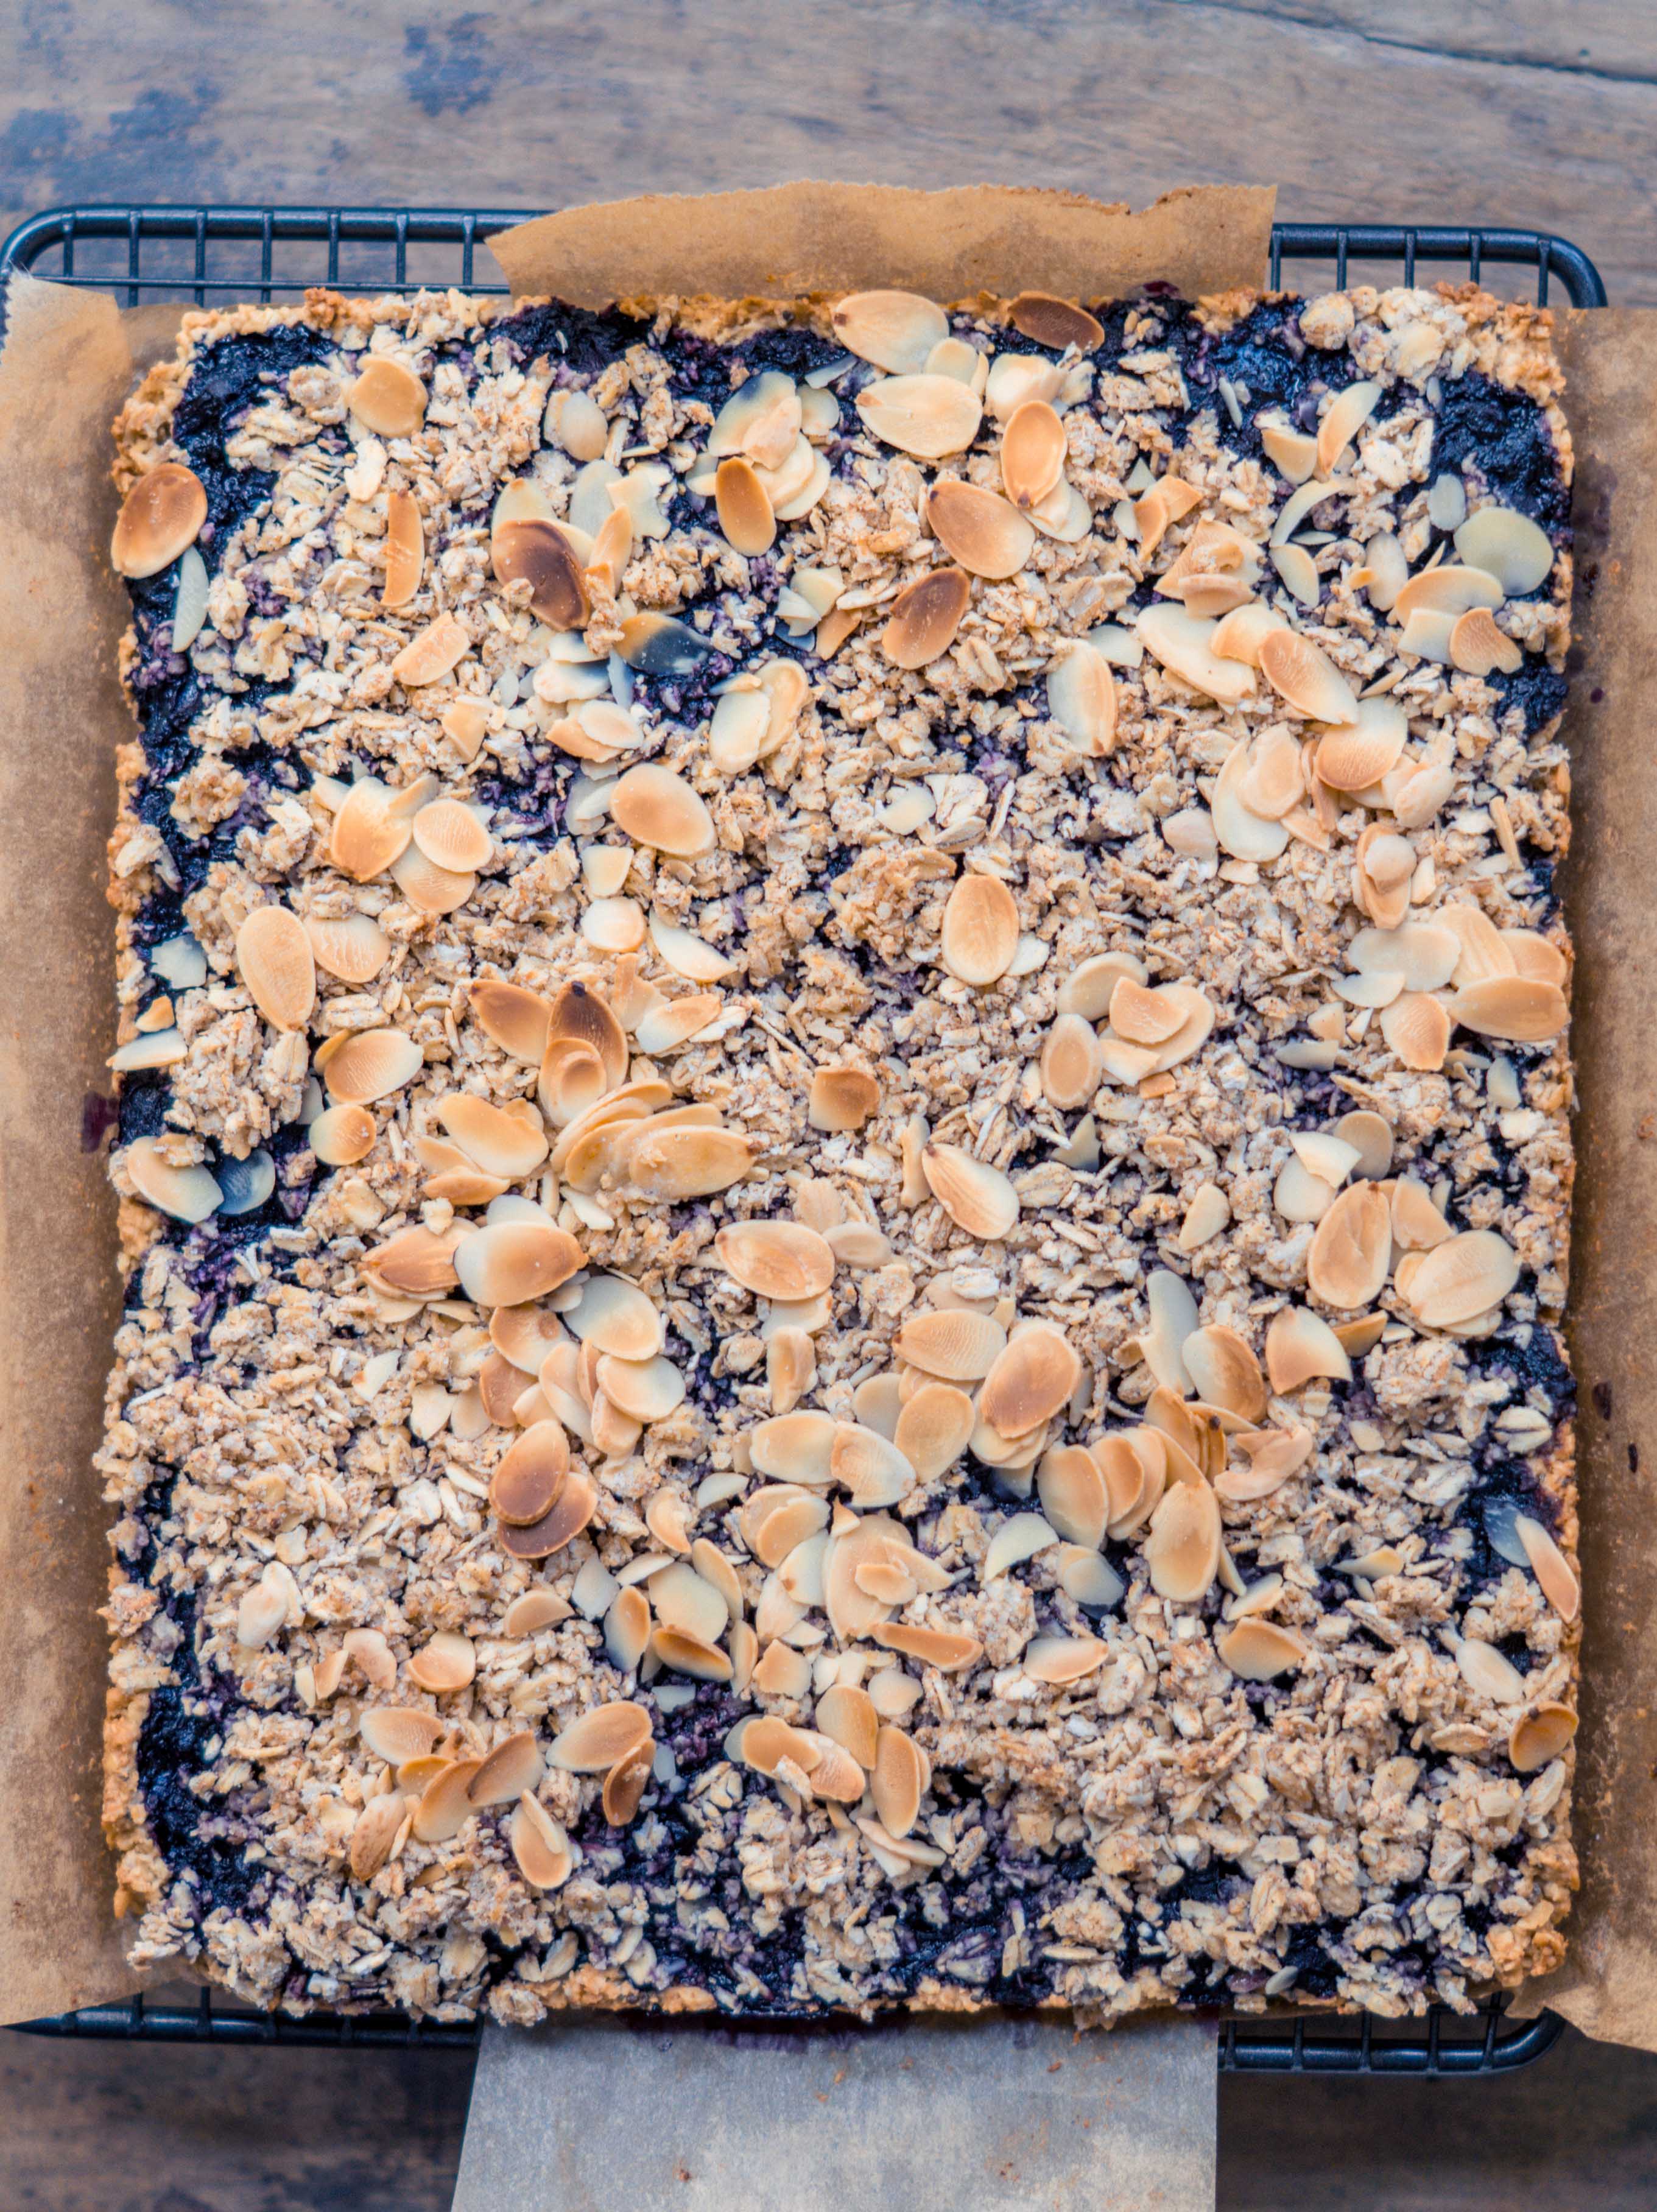 Blueberry oatmeal bars